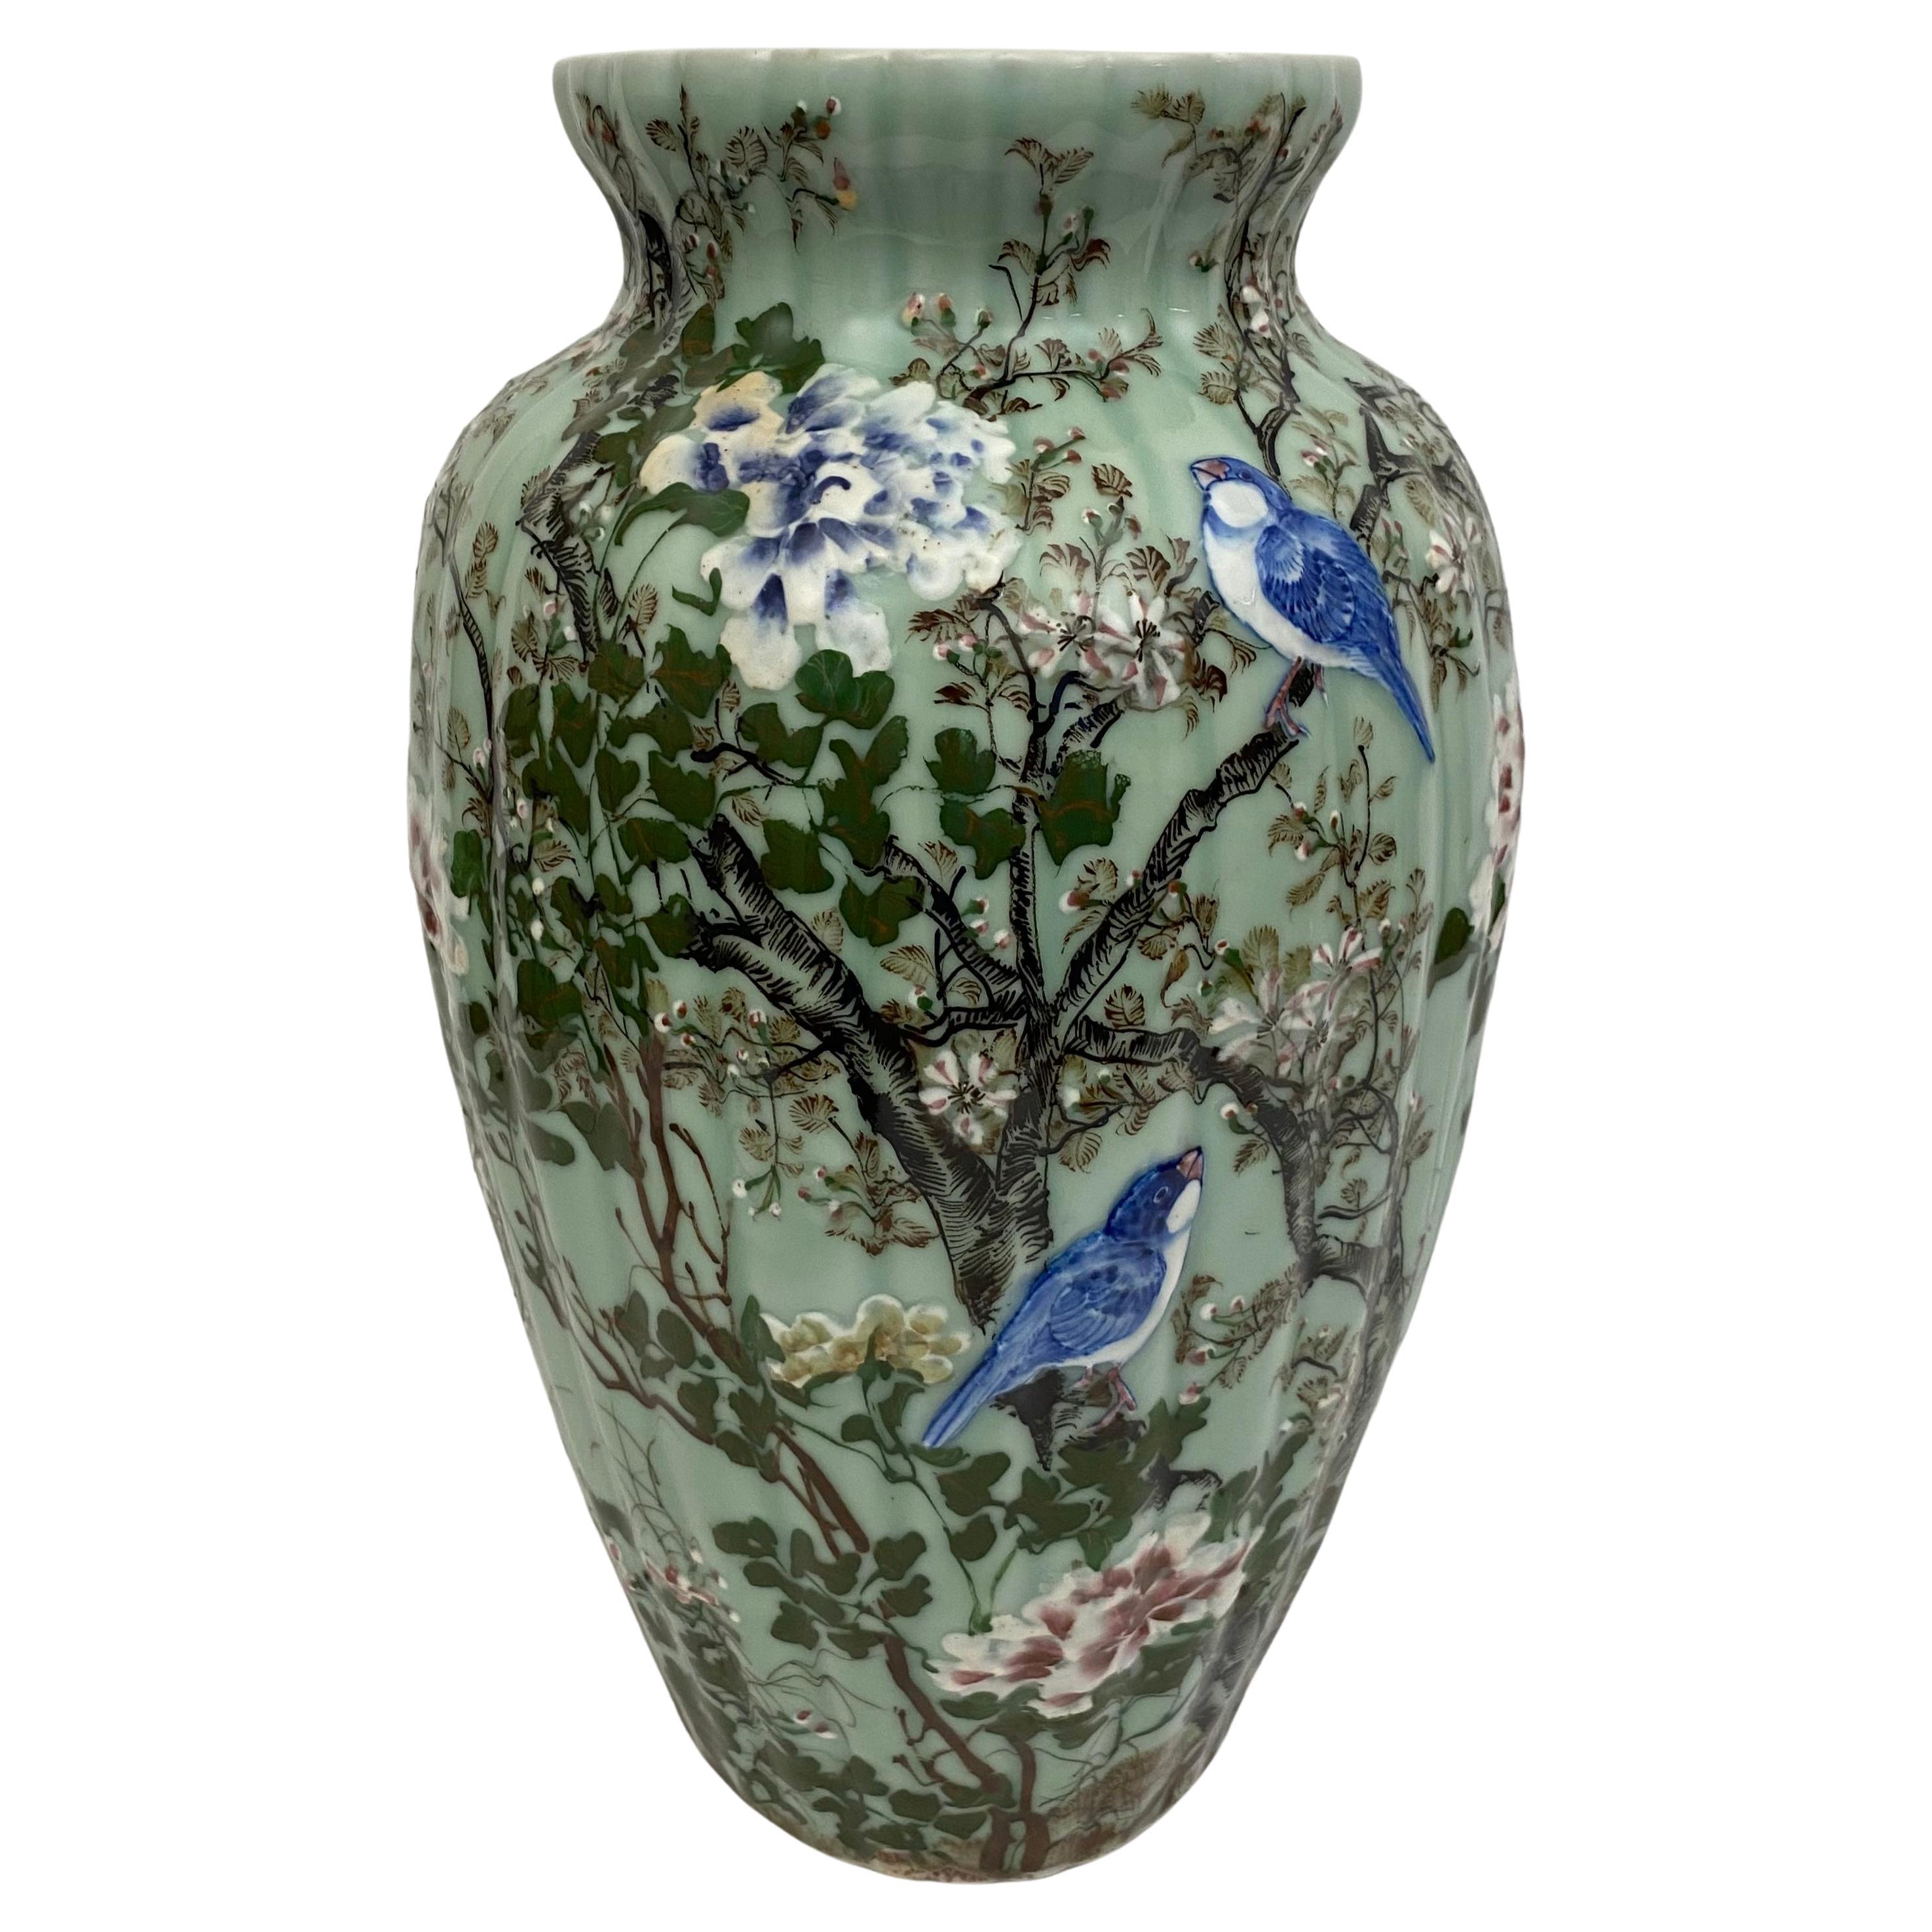 Medji Period High Relief Porcelain Celadon Vase, circa 1900